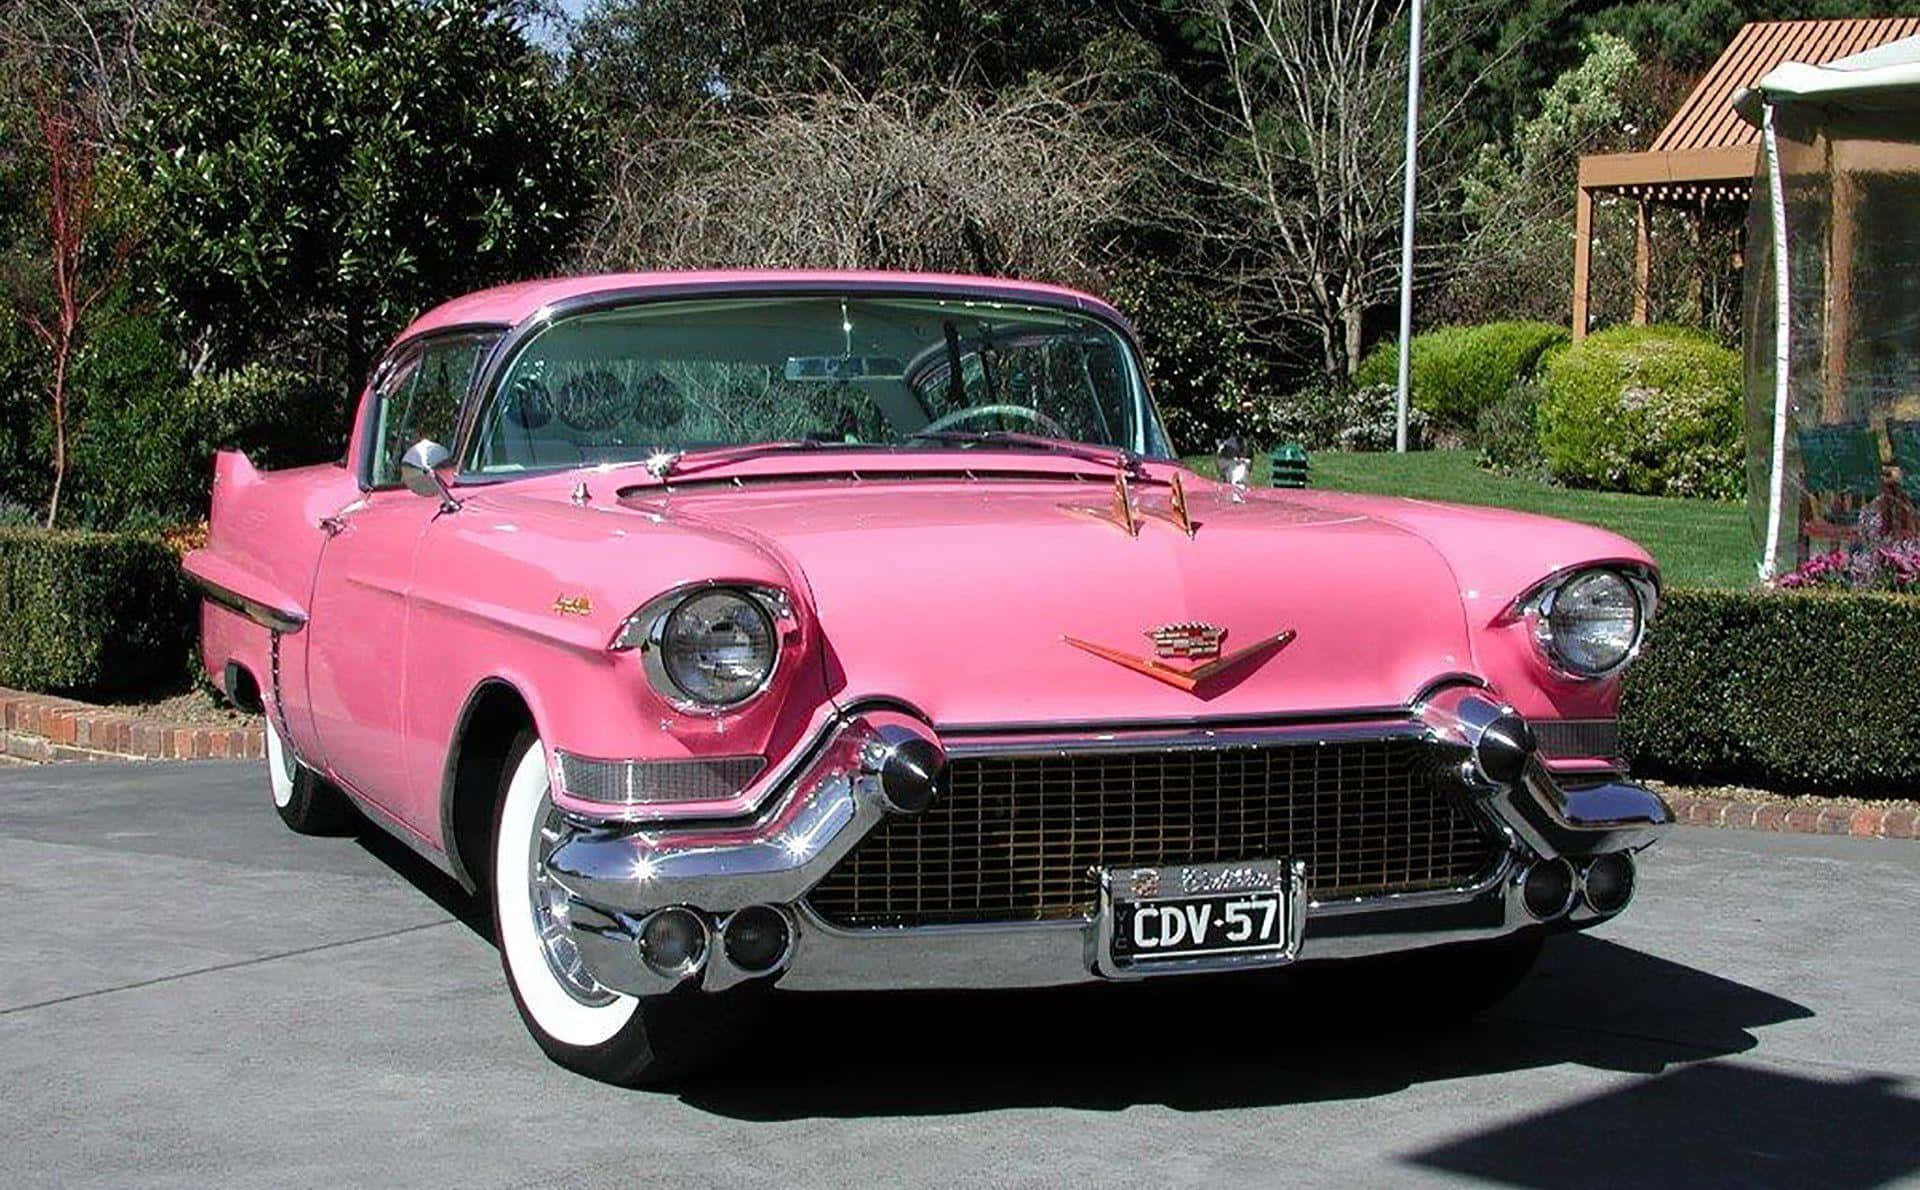 Take a ride in this gorgeous pink vintage car Wallpaper